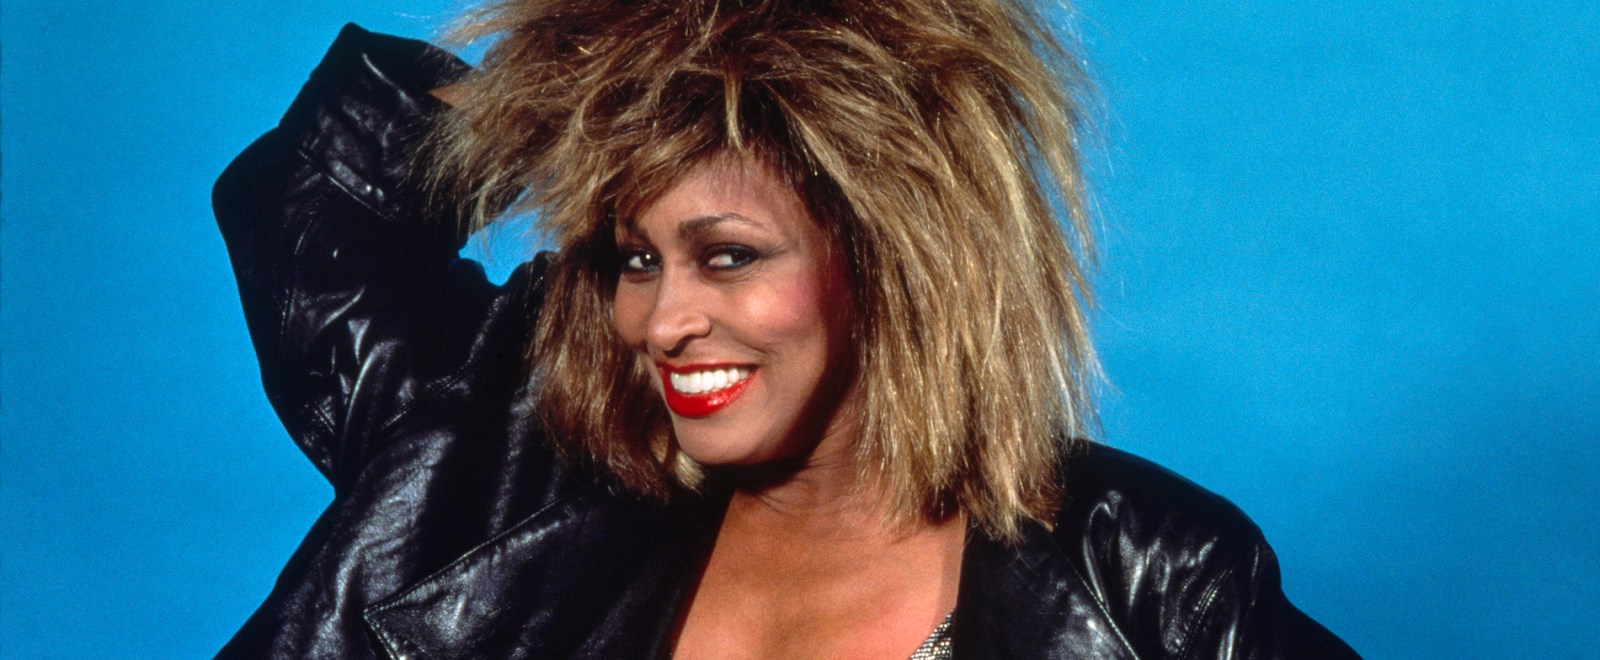 Tina Turner 1985